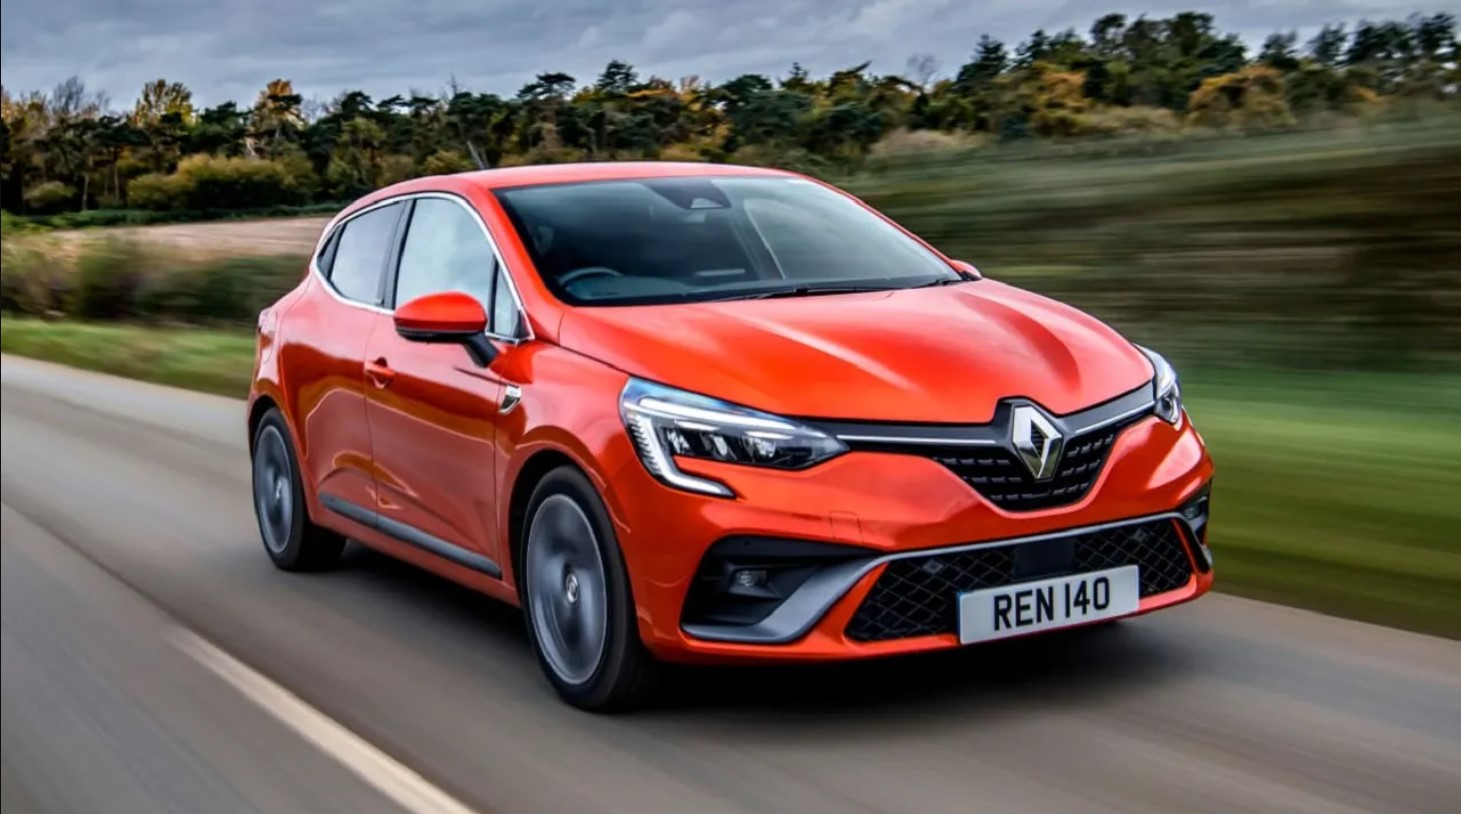 Renault'tan Yılın Son Kampanyası! 540 Bin TL'ye Sıfır Clio Satışı Başladı! İkinci El Fiyatından Daha Ucuz